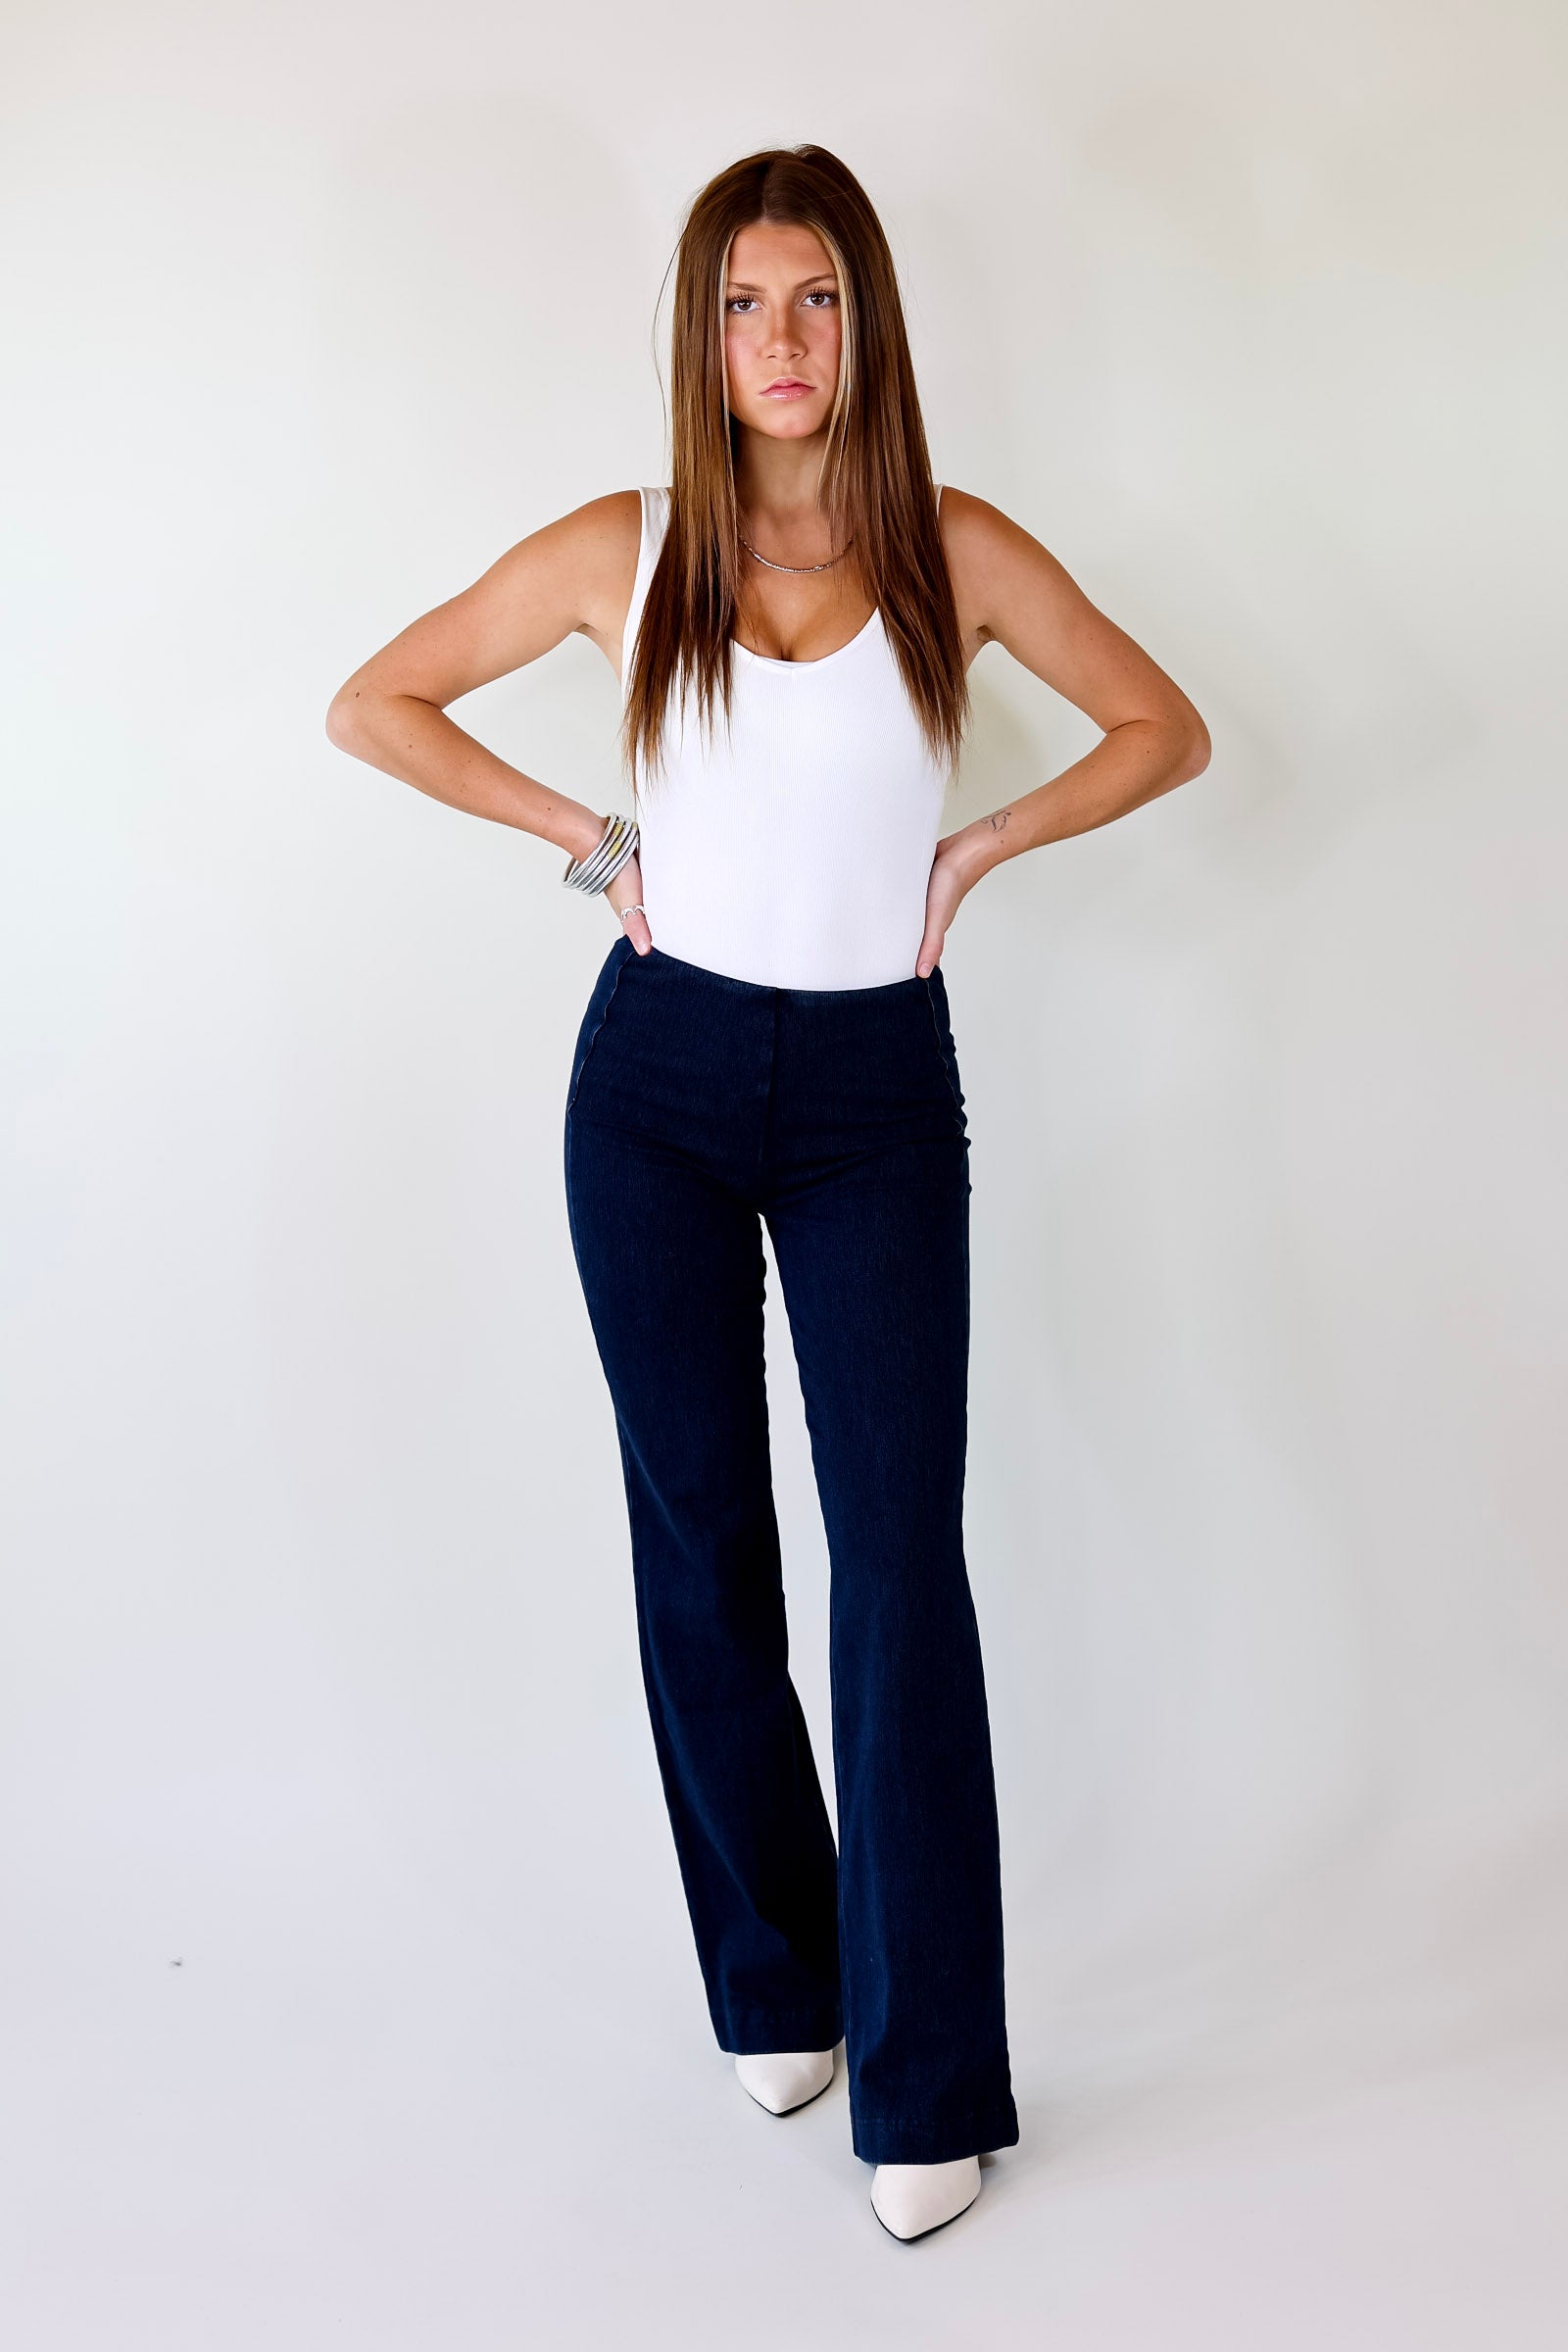 Lyssé | Denim Wide Leg Trouser Jeans in Indigo - Giddy Up Glamour Boutique